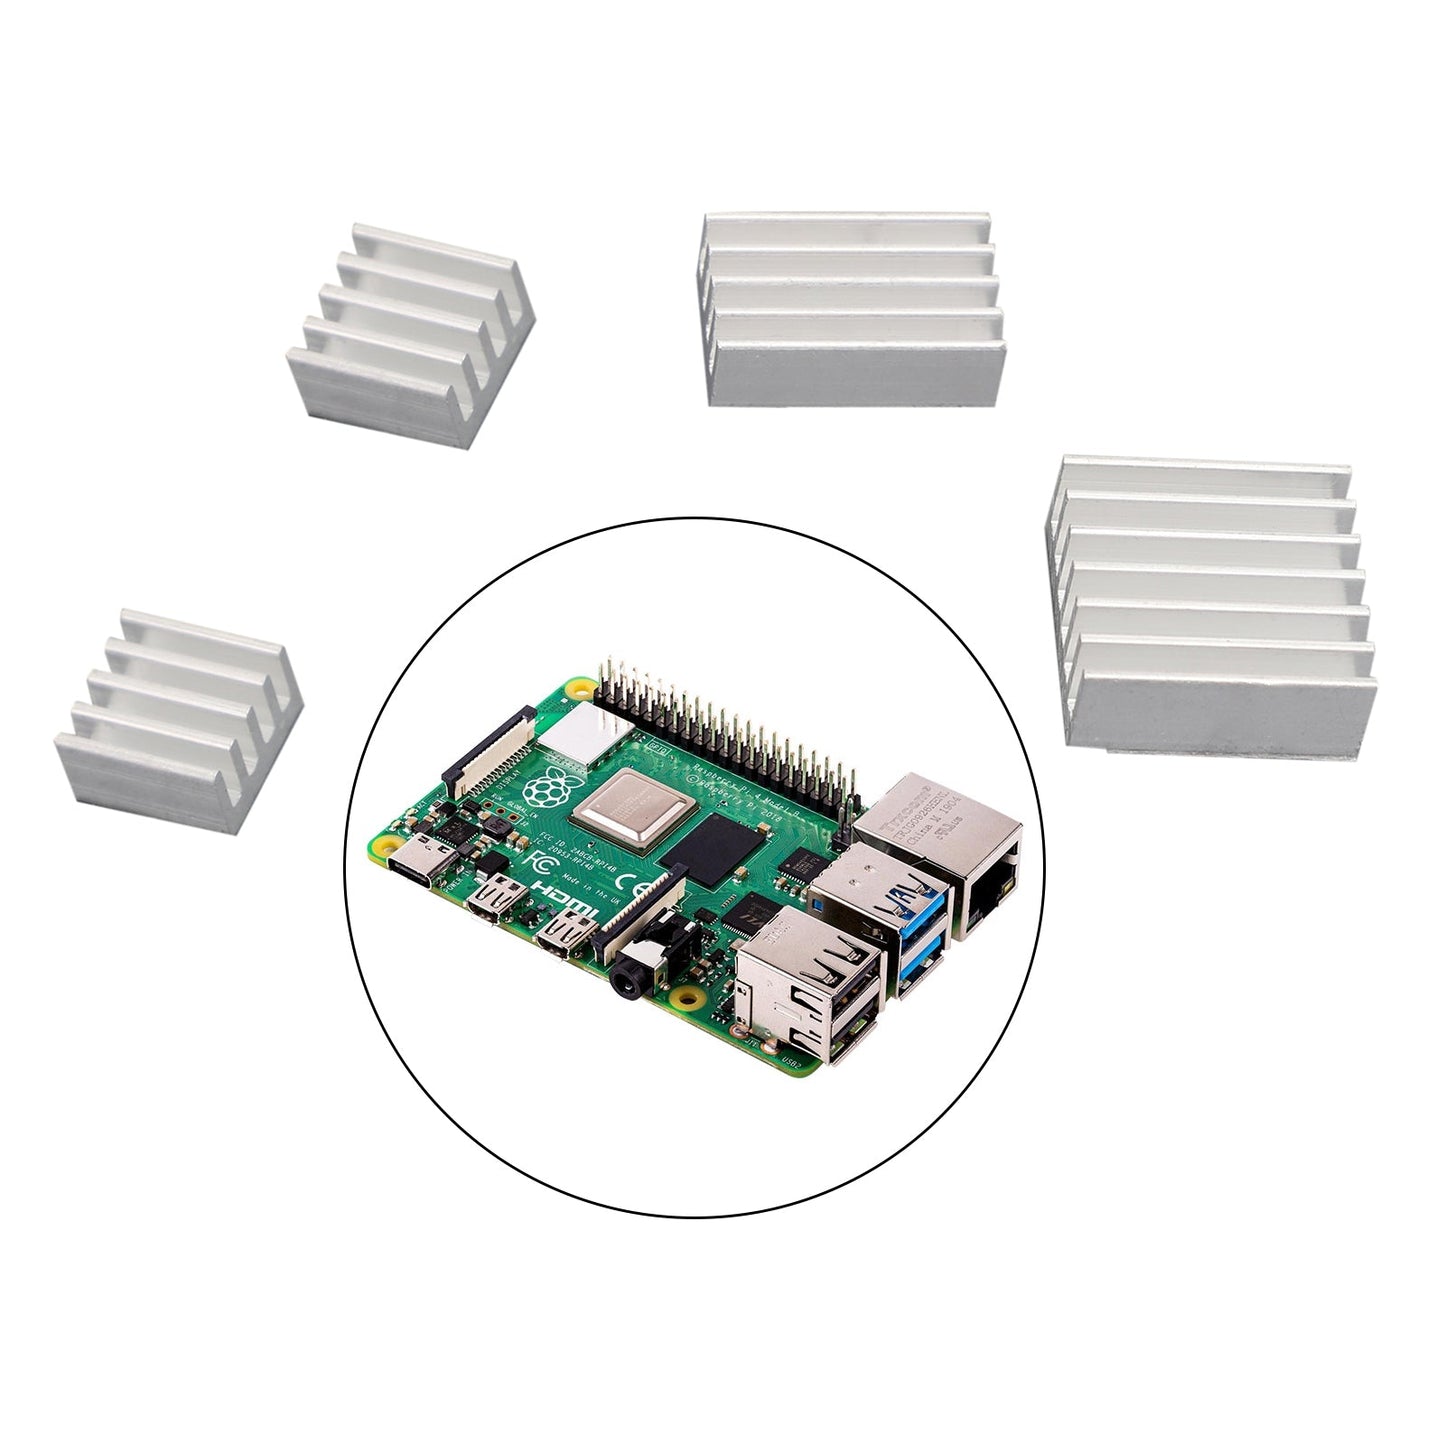 Durable Heatsink Radiator Cooler Kit with Sticker 4PCS/Set Raspberry Pi 4B Model